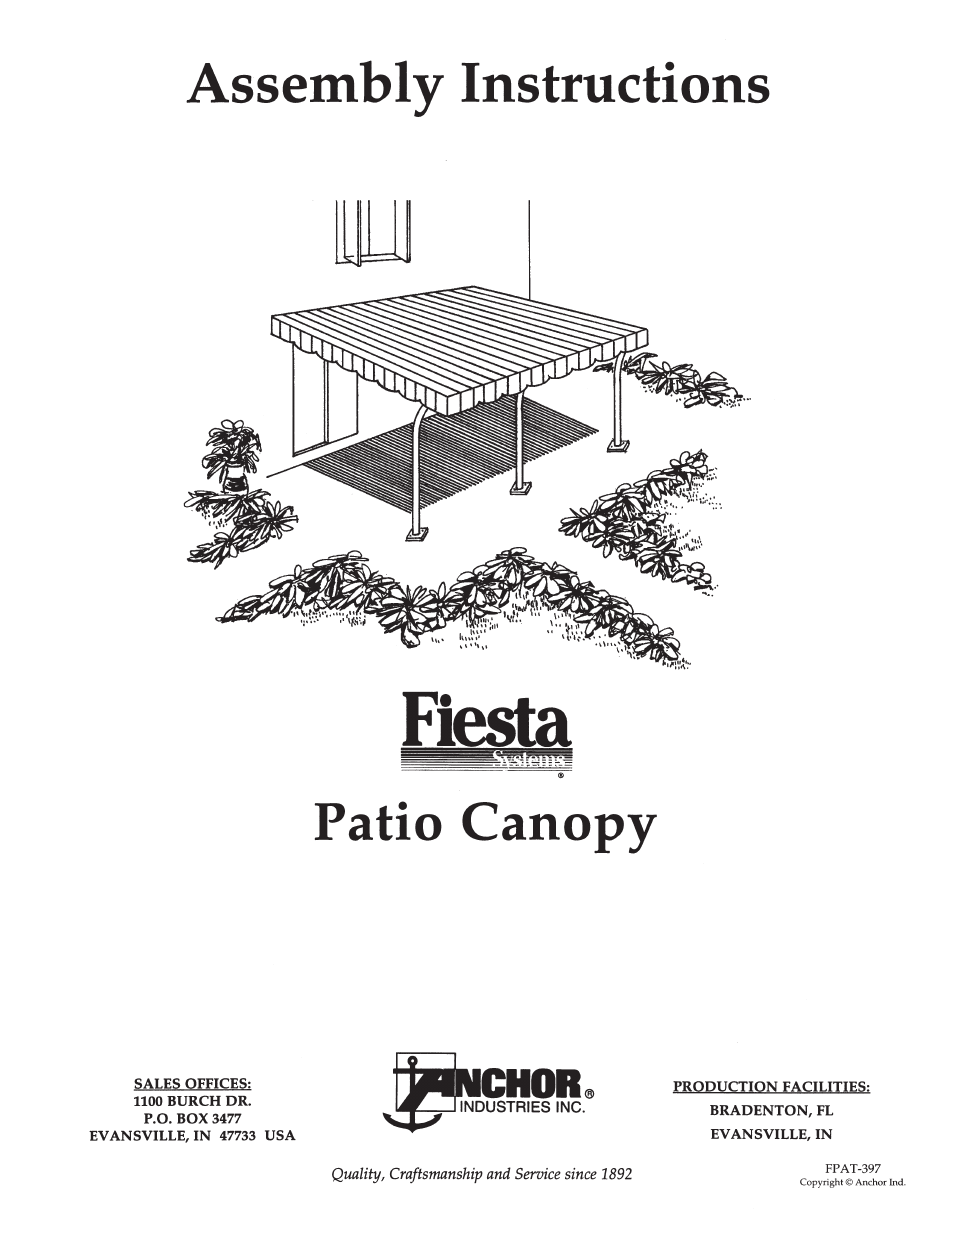 FIESTA PATIO CANOPY